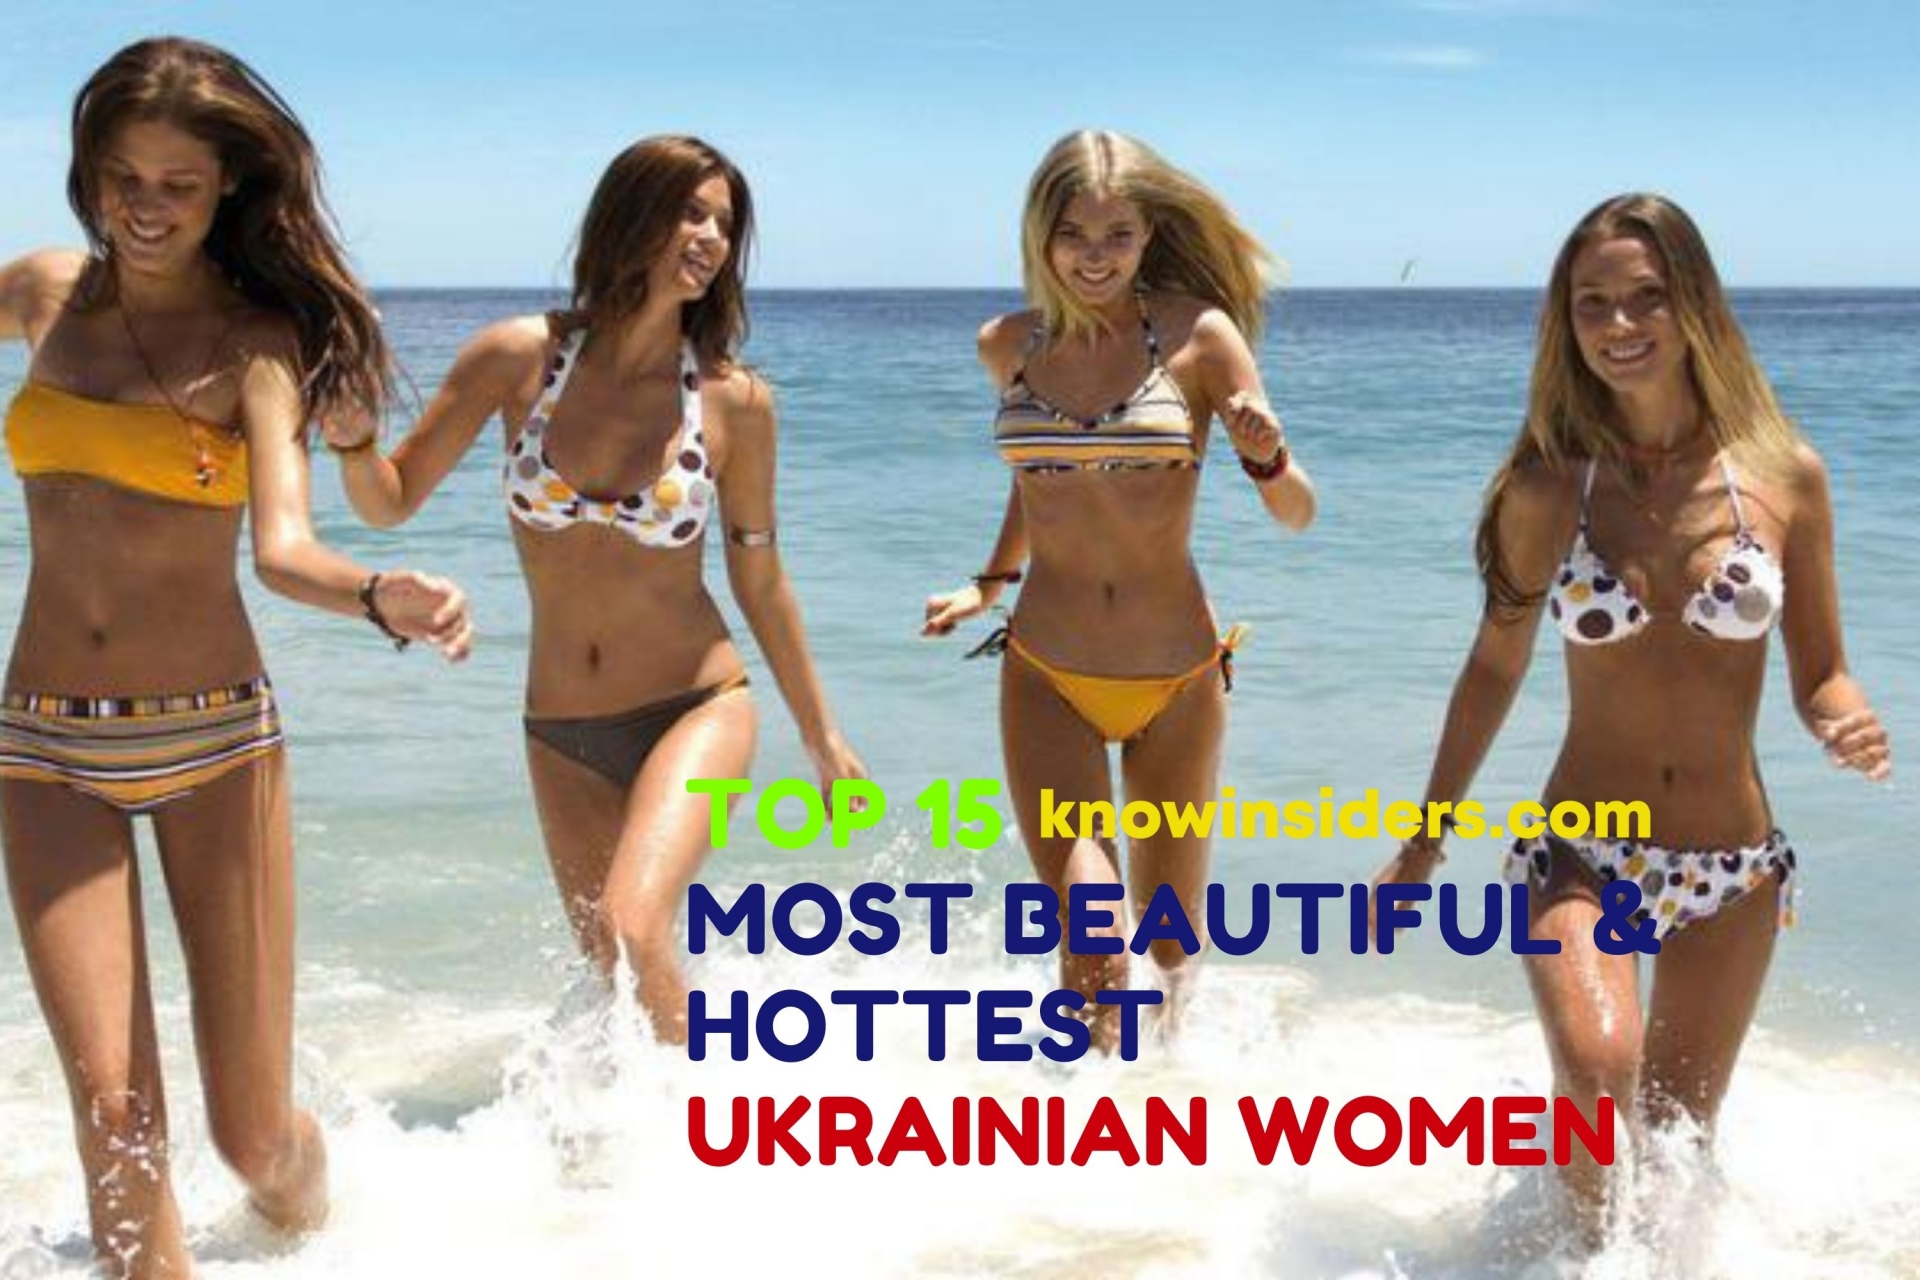 Top 15 Most Beautiful & Hottest Ukrainian Women That Mesmerize World